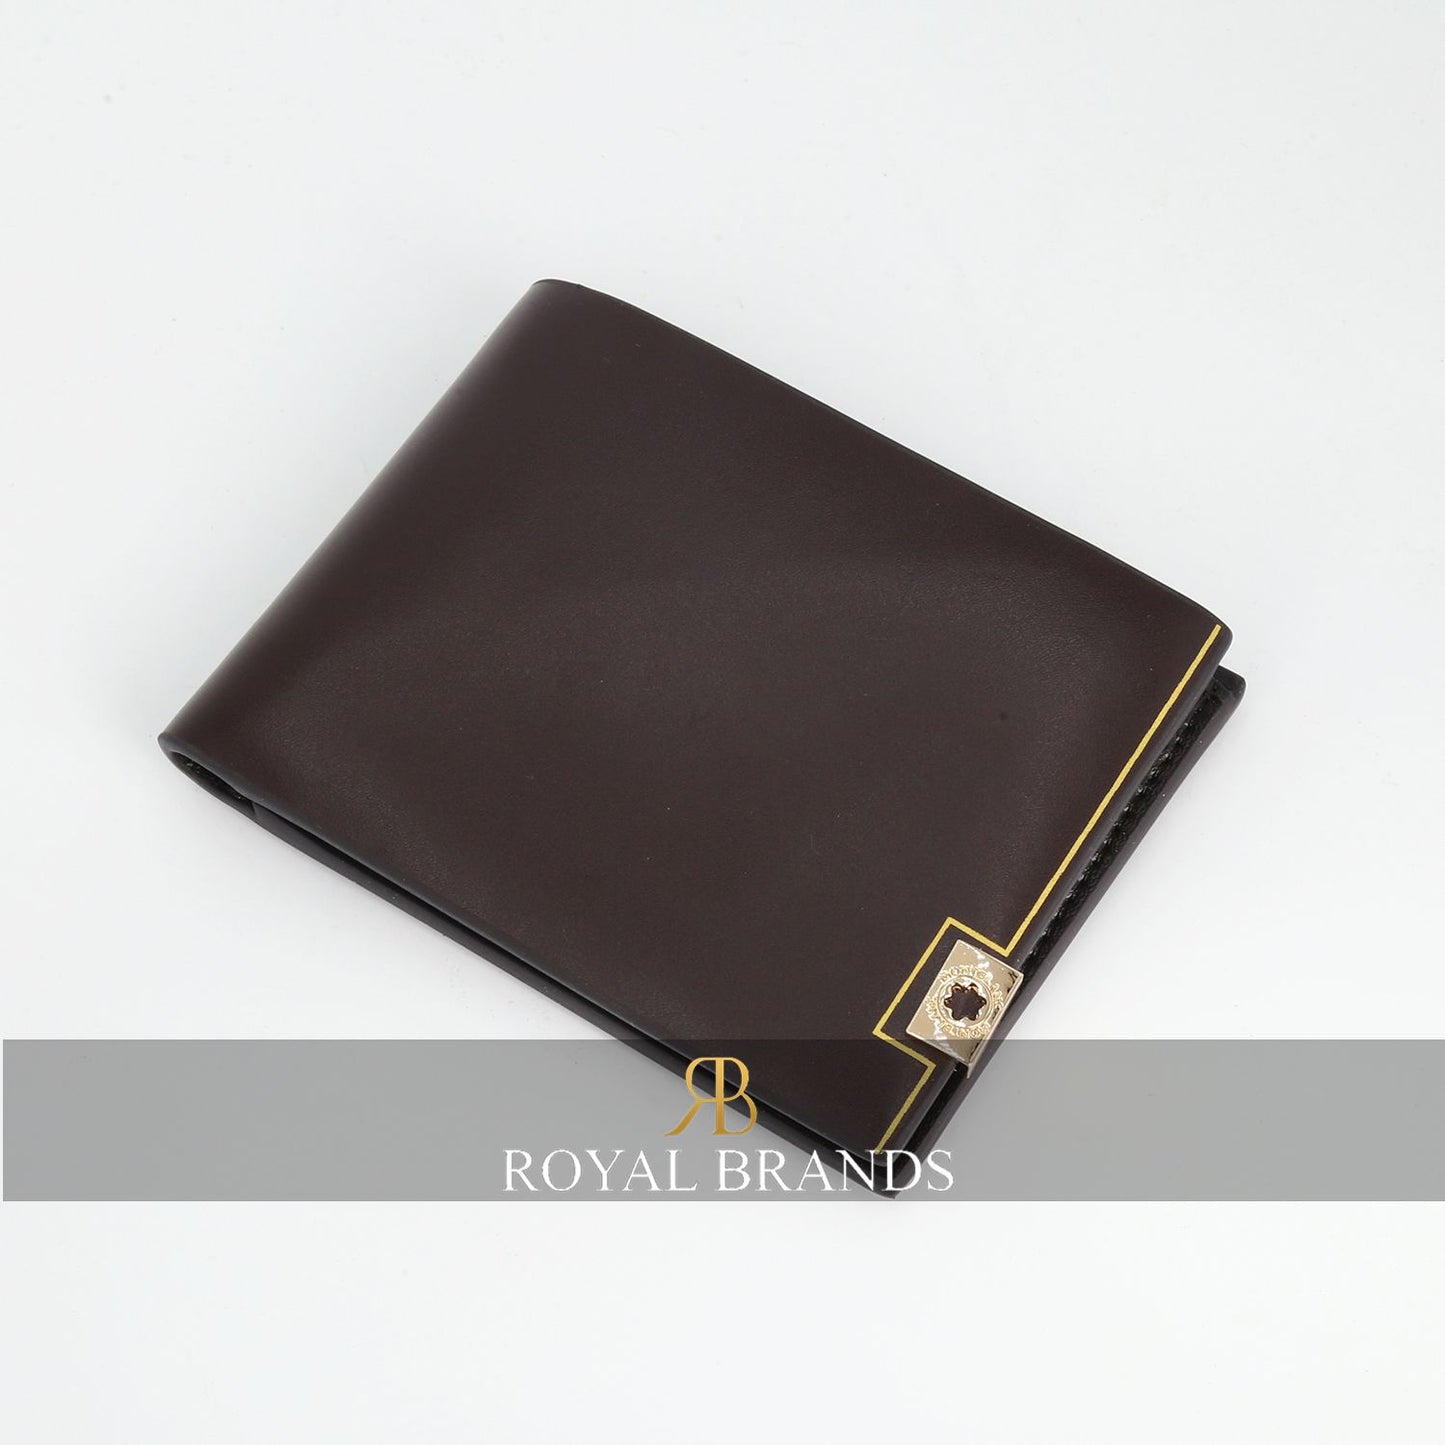 Latest Black Leather Bifold Wallet For Men ( 7B )